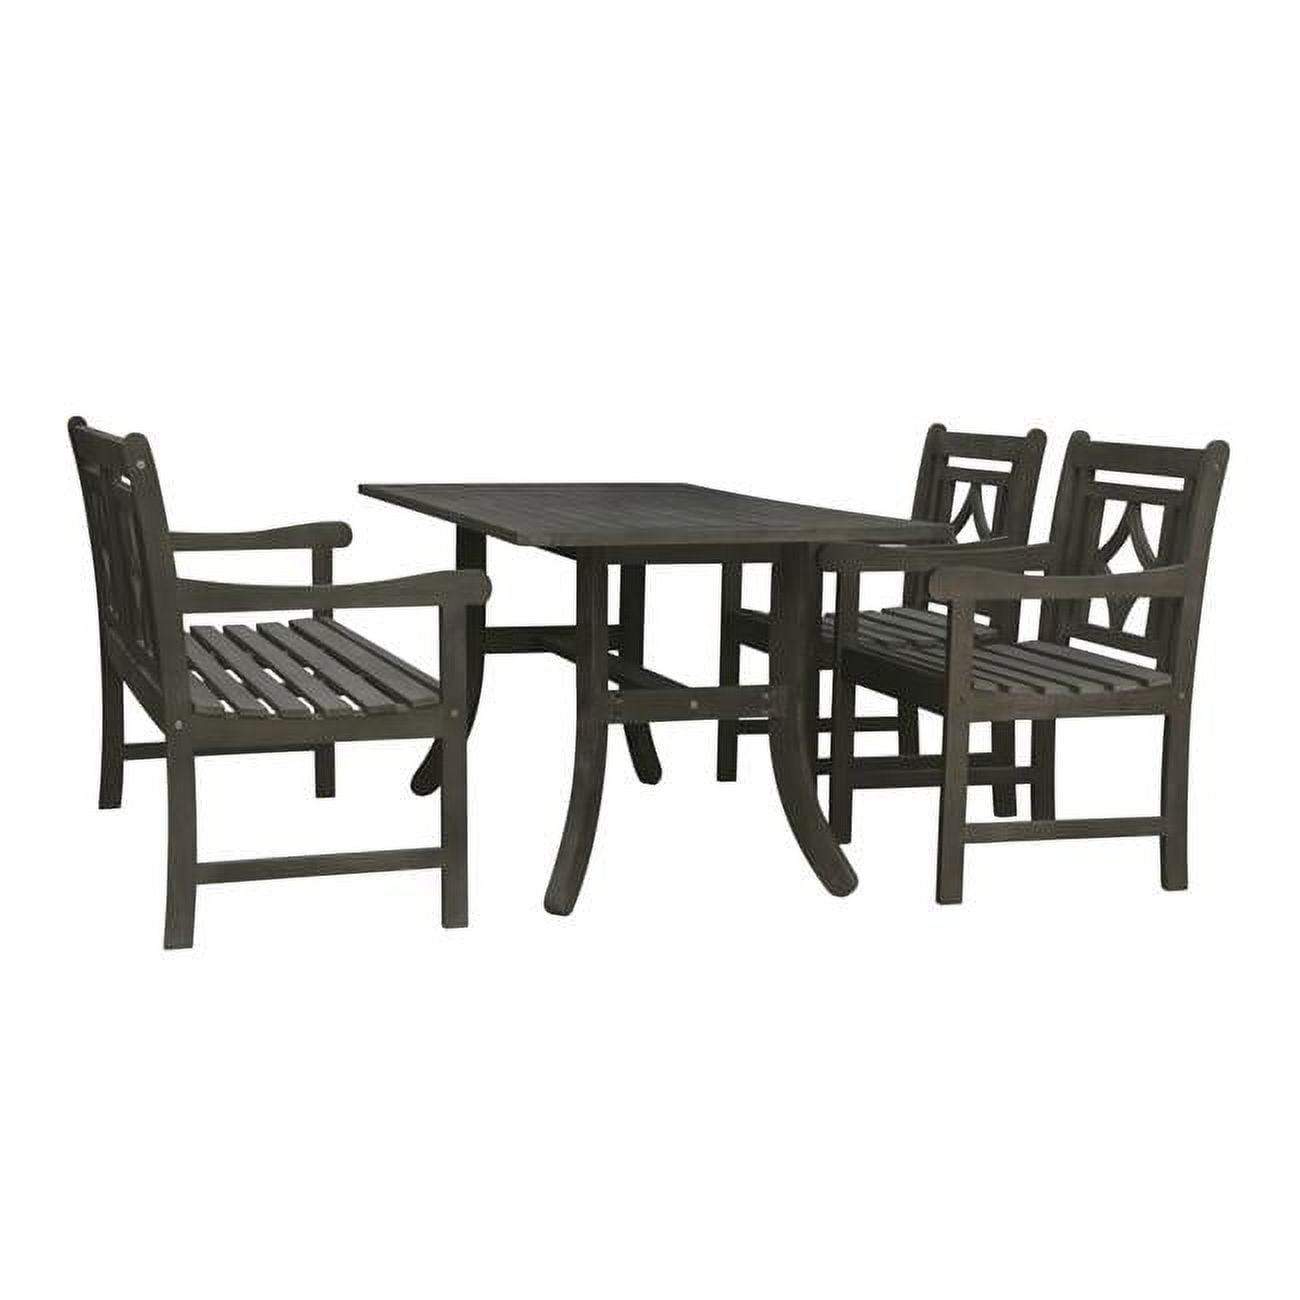 V1300set16 Renaissance Outdoor Wood Patio Curvy Legs Table Dining Set, Vista Grey - 34 X 22 X 24 In. - 4 Piece